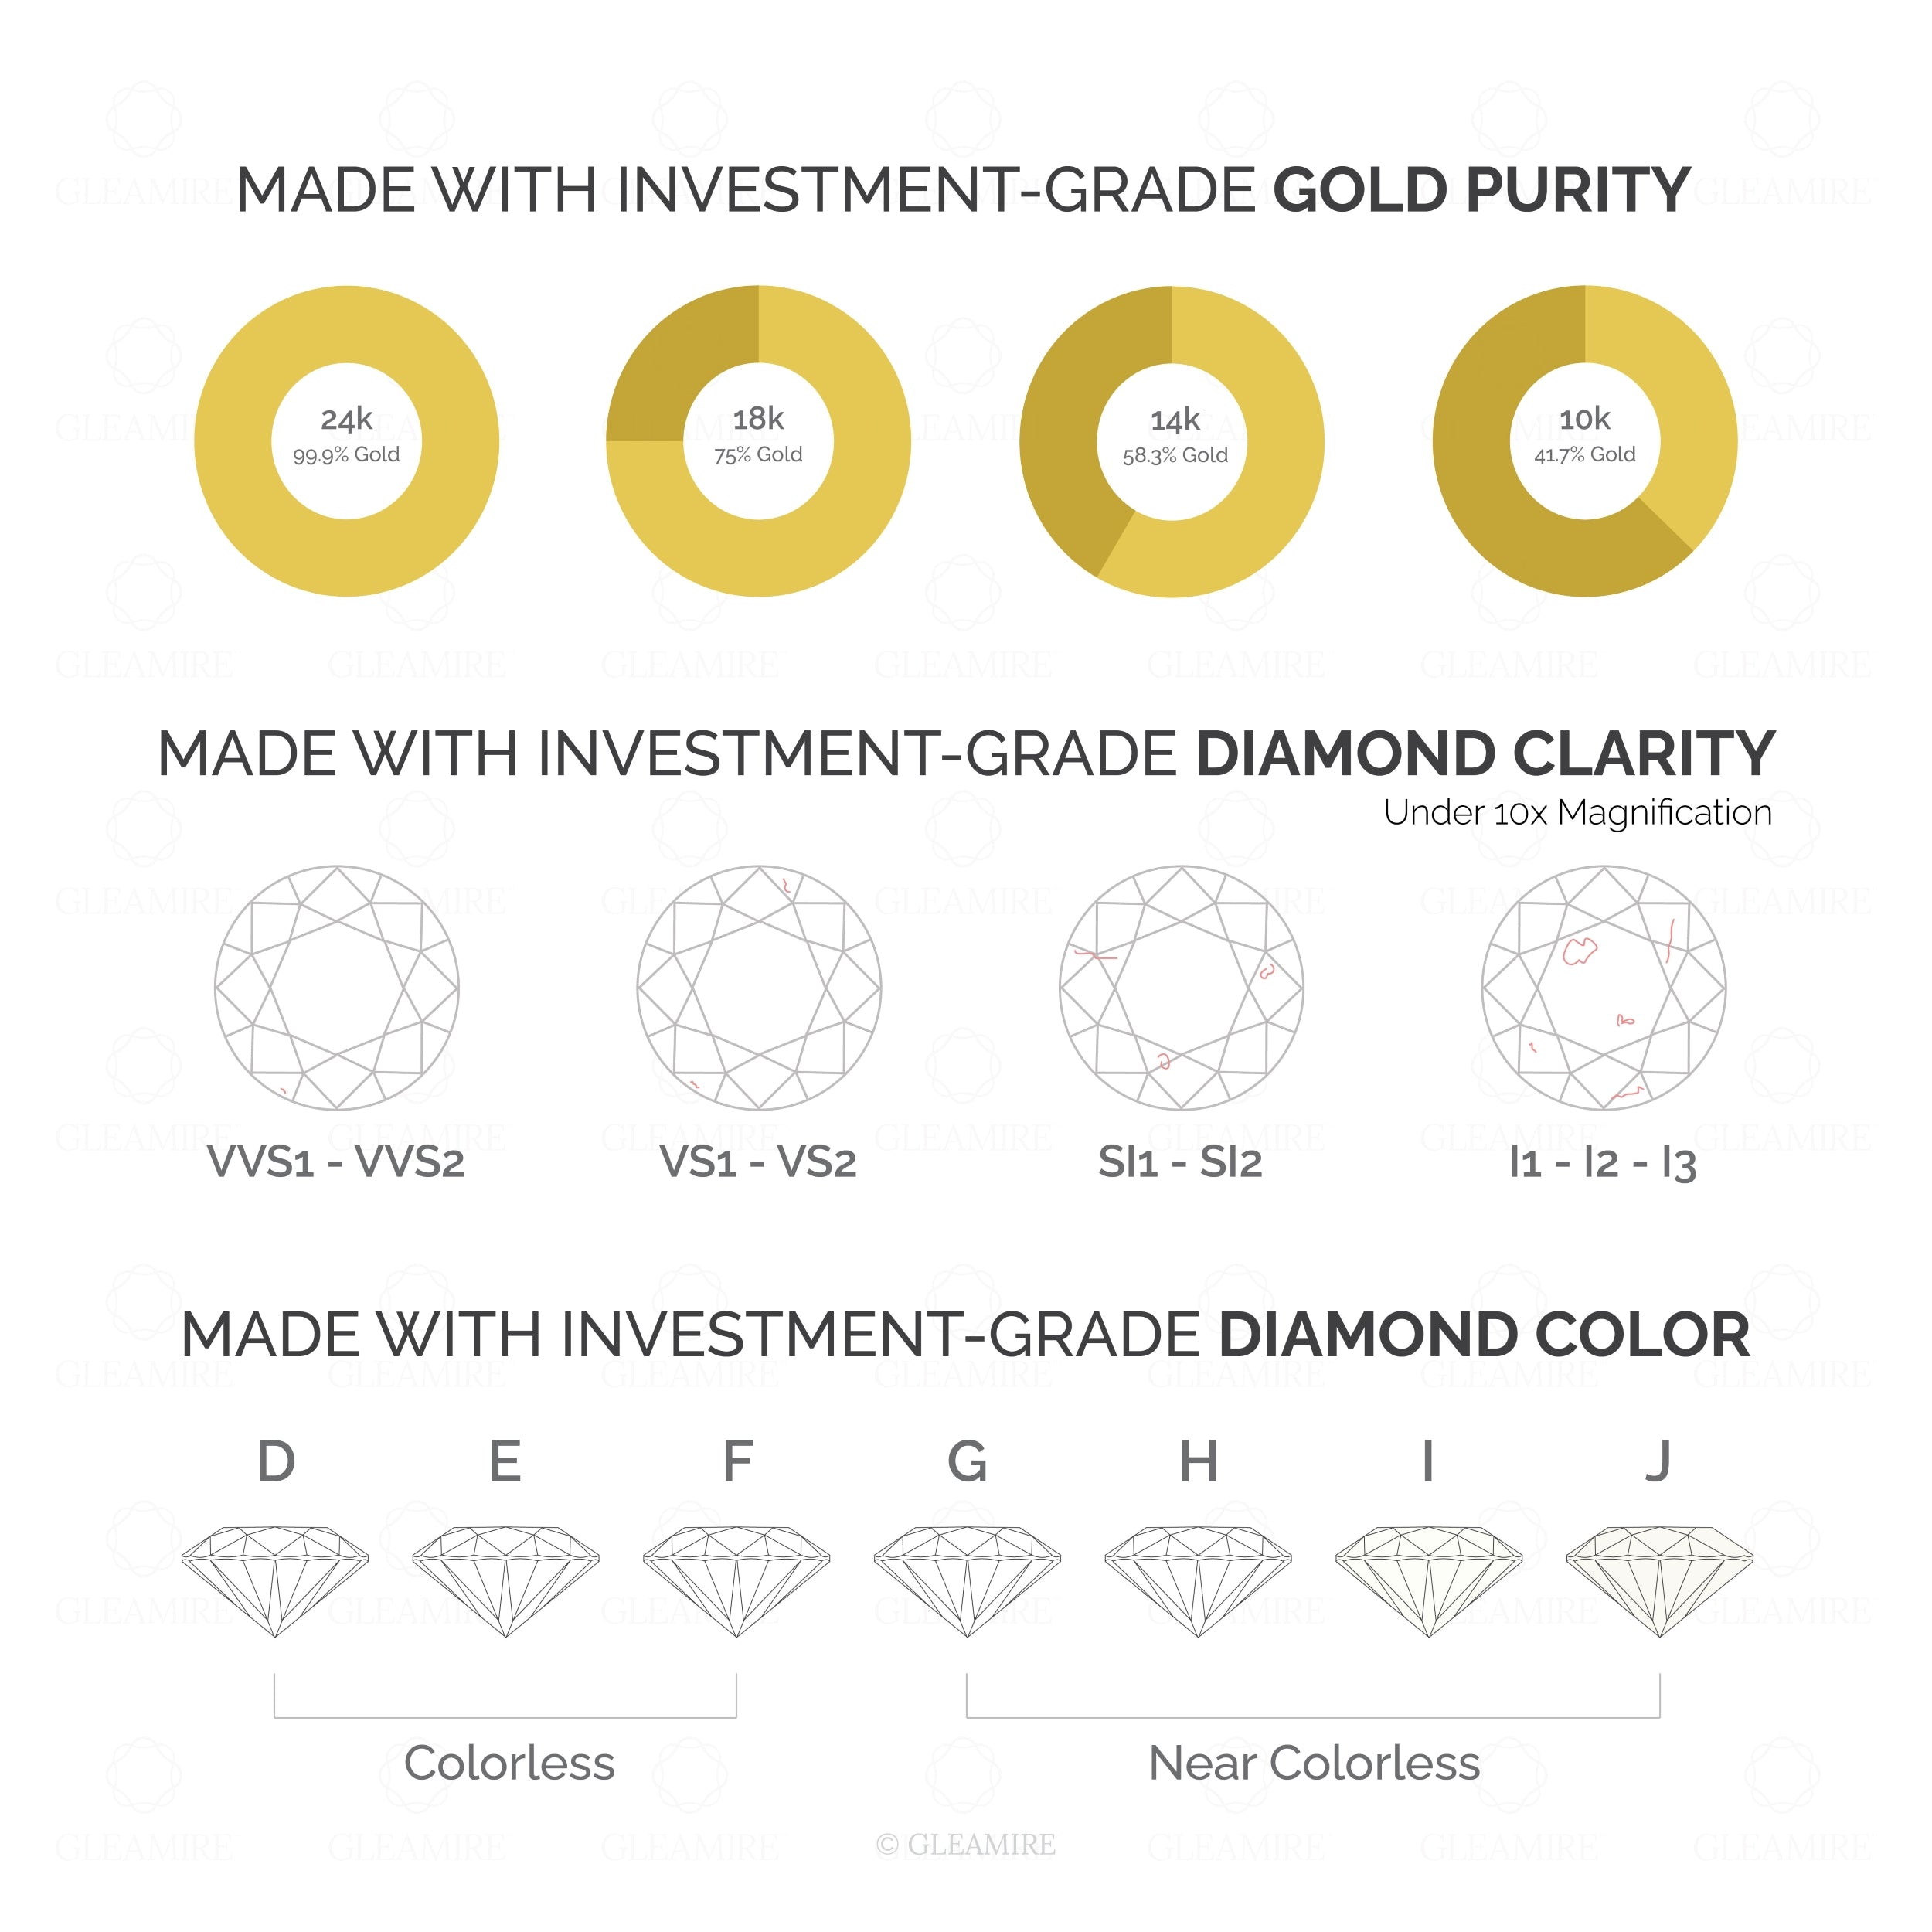 Certified 0.15ct Natural Diamond F-I1 10K Gold Designer 2 Cuved V Stack Yellow Ring